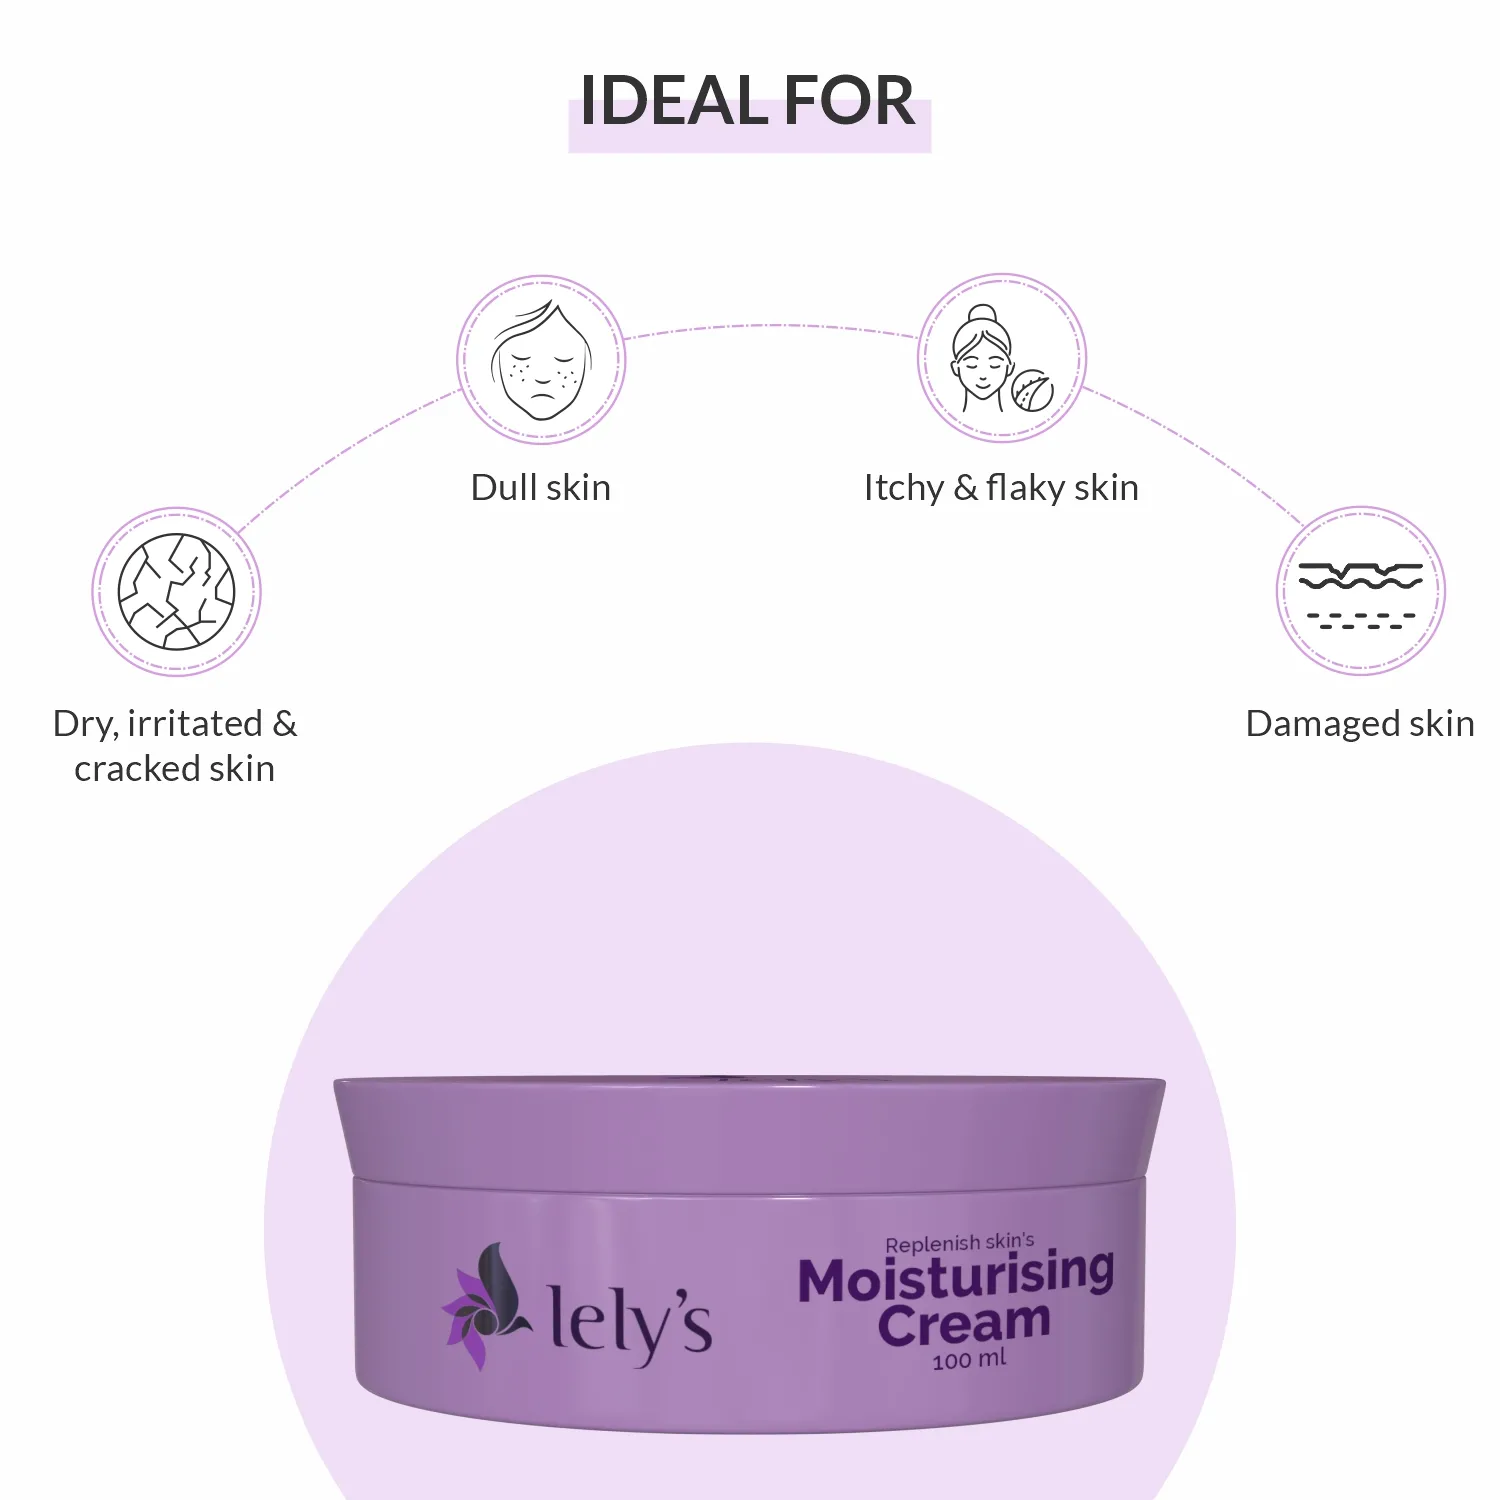 Body moisturizer creams for dry skin